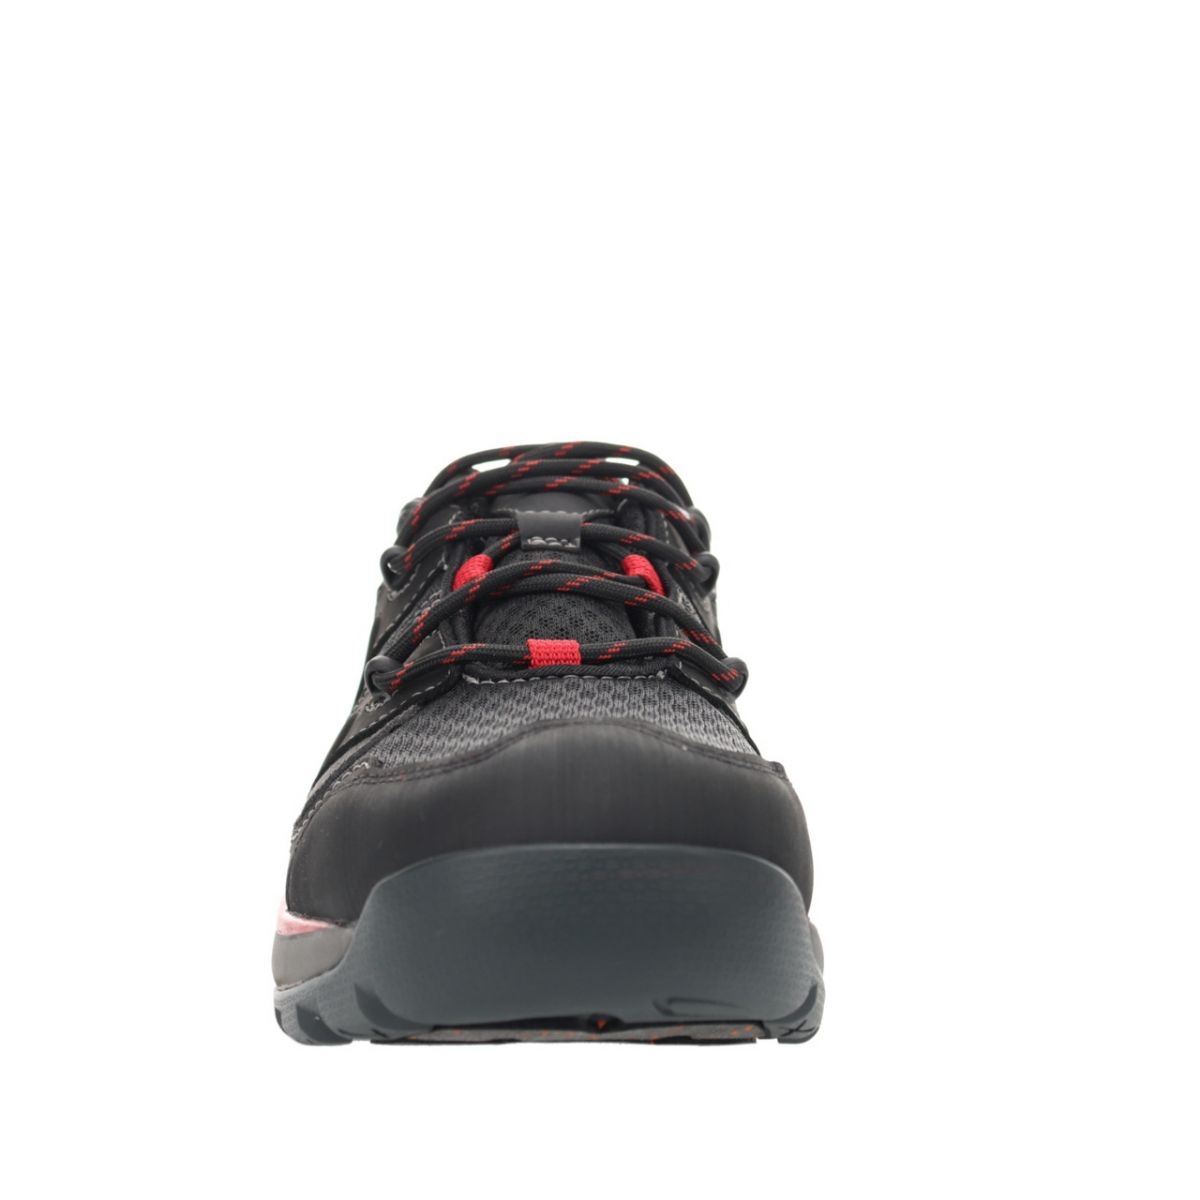 Propet Men's Vercors Hiking Shoe Black/Red - MOA002SBRD BLACK/RED - BLACK/RED, 8